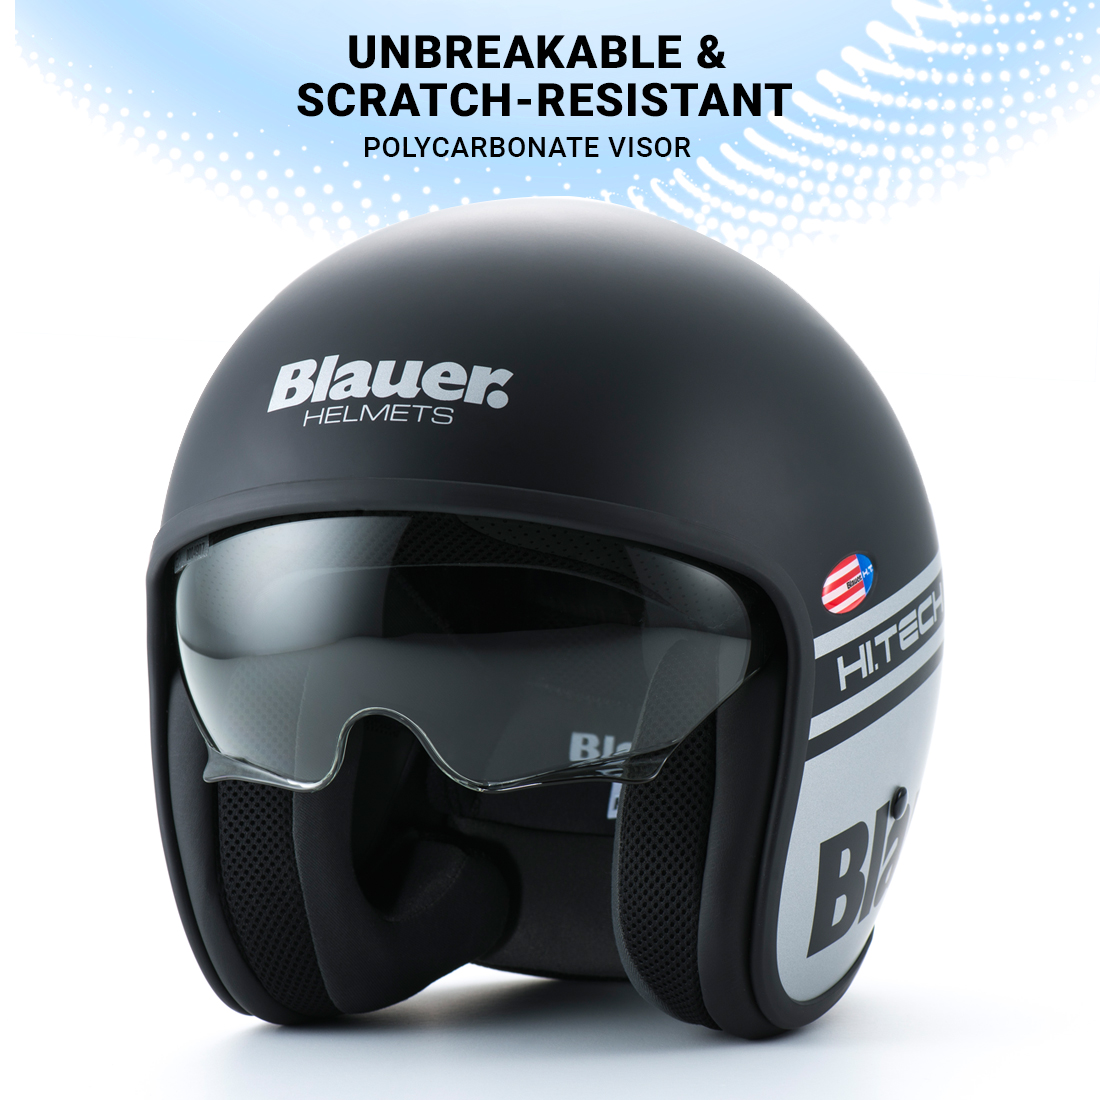 Steelbird Blauer Pilot ISI/ECE Certified Open Face Helmet (Matt Black)